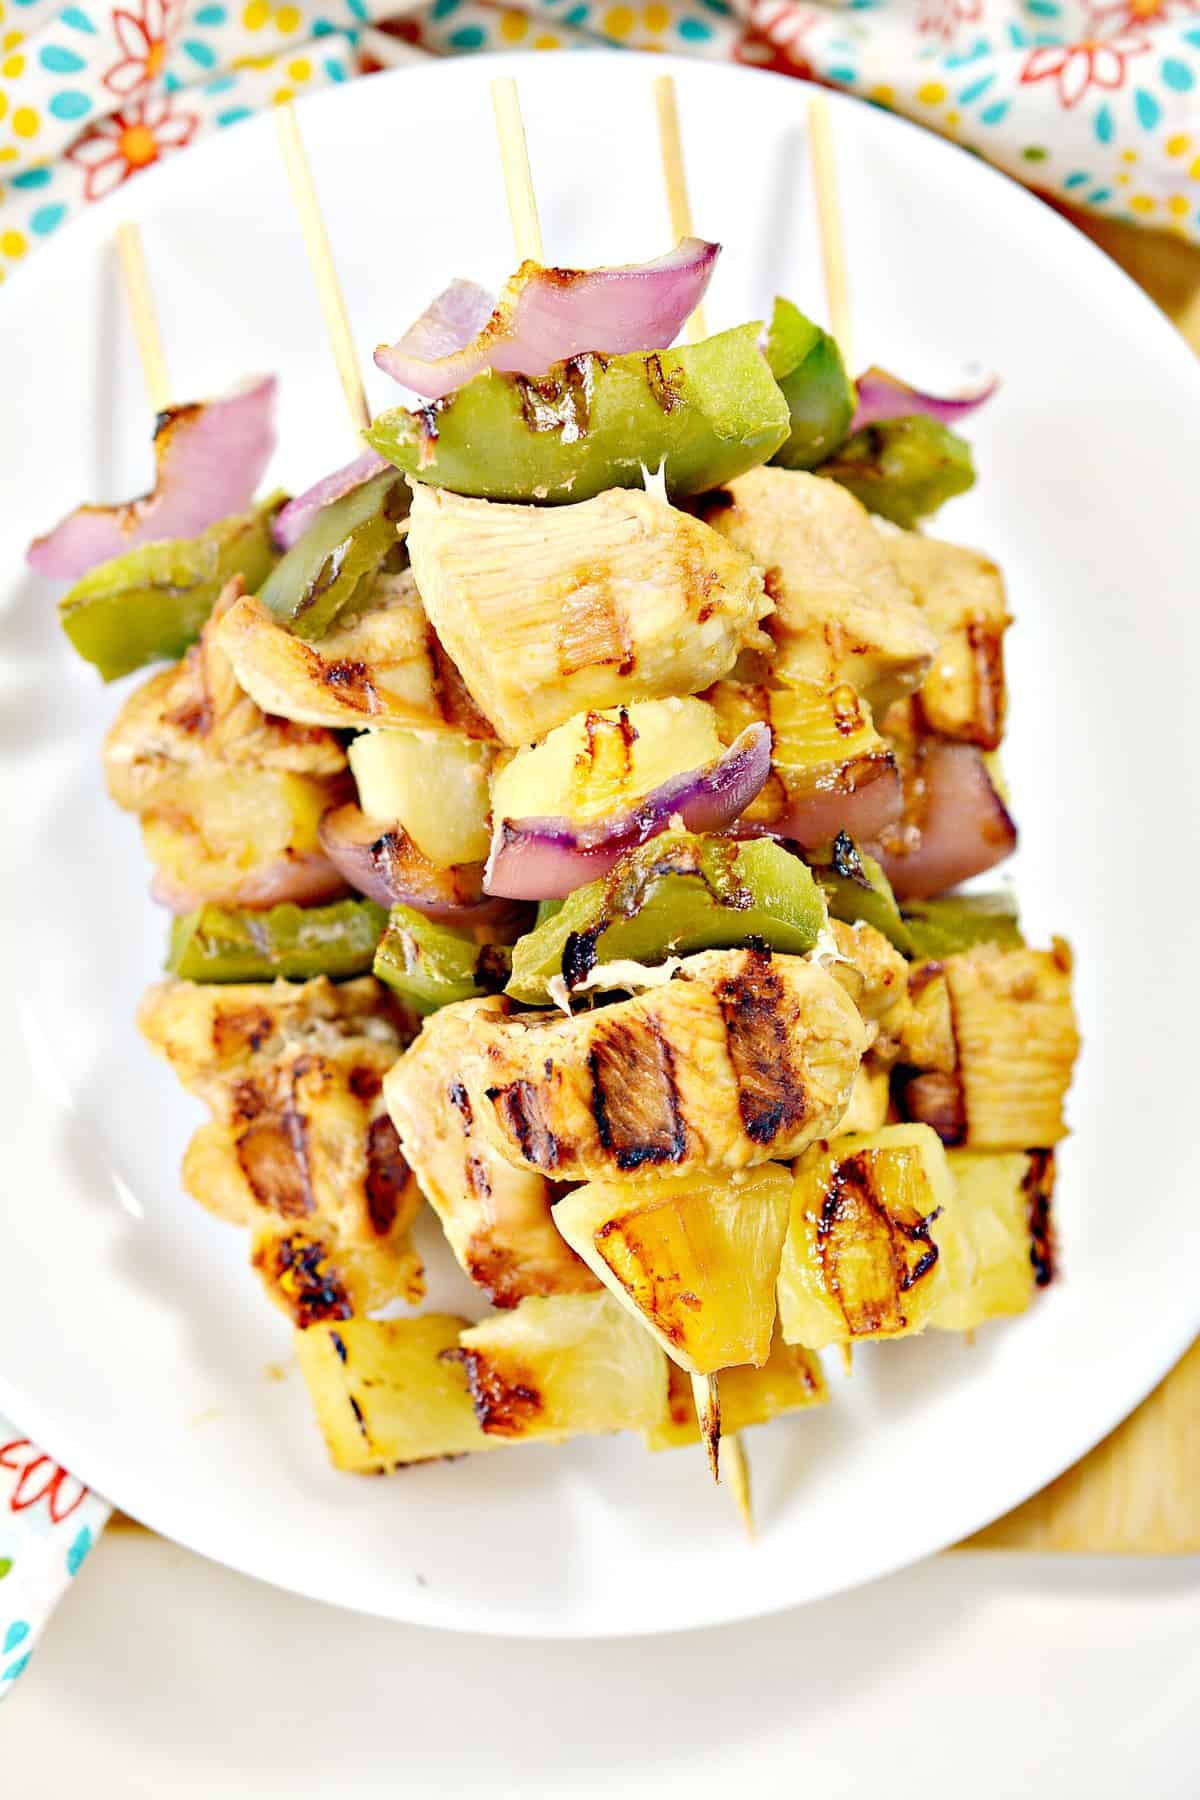 Pineapple Chicken Kebabs